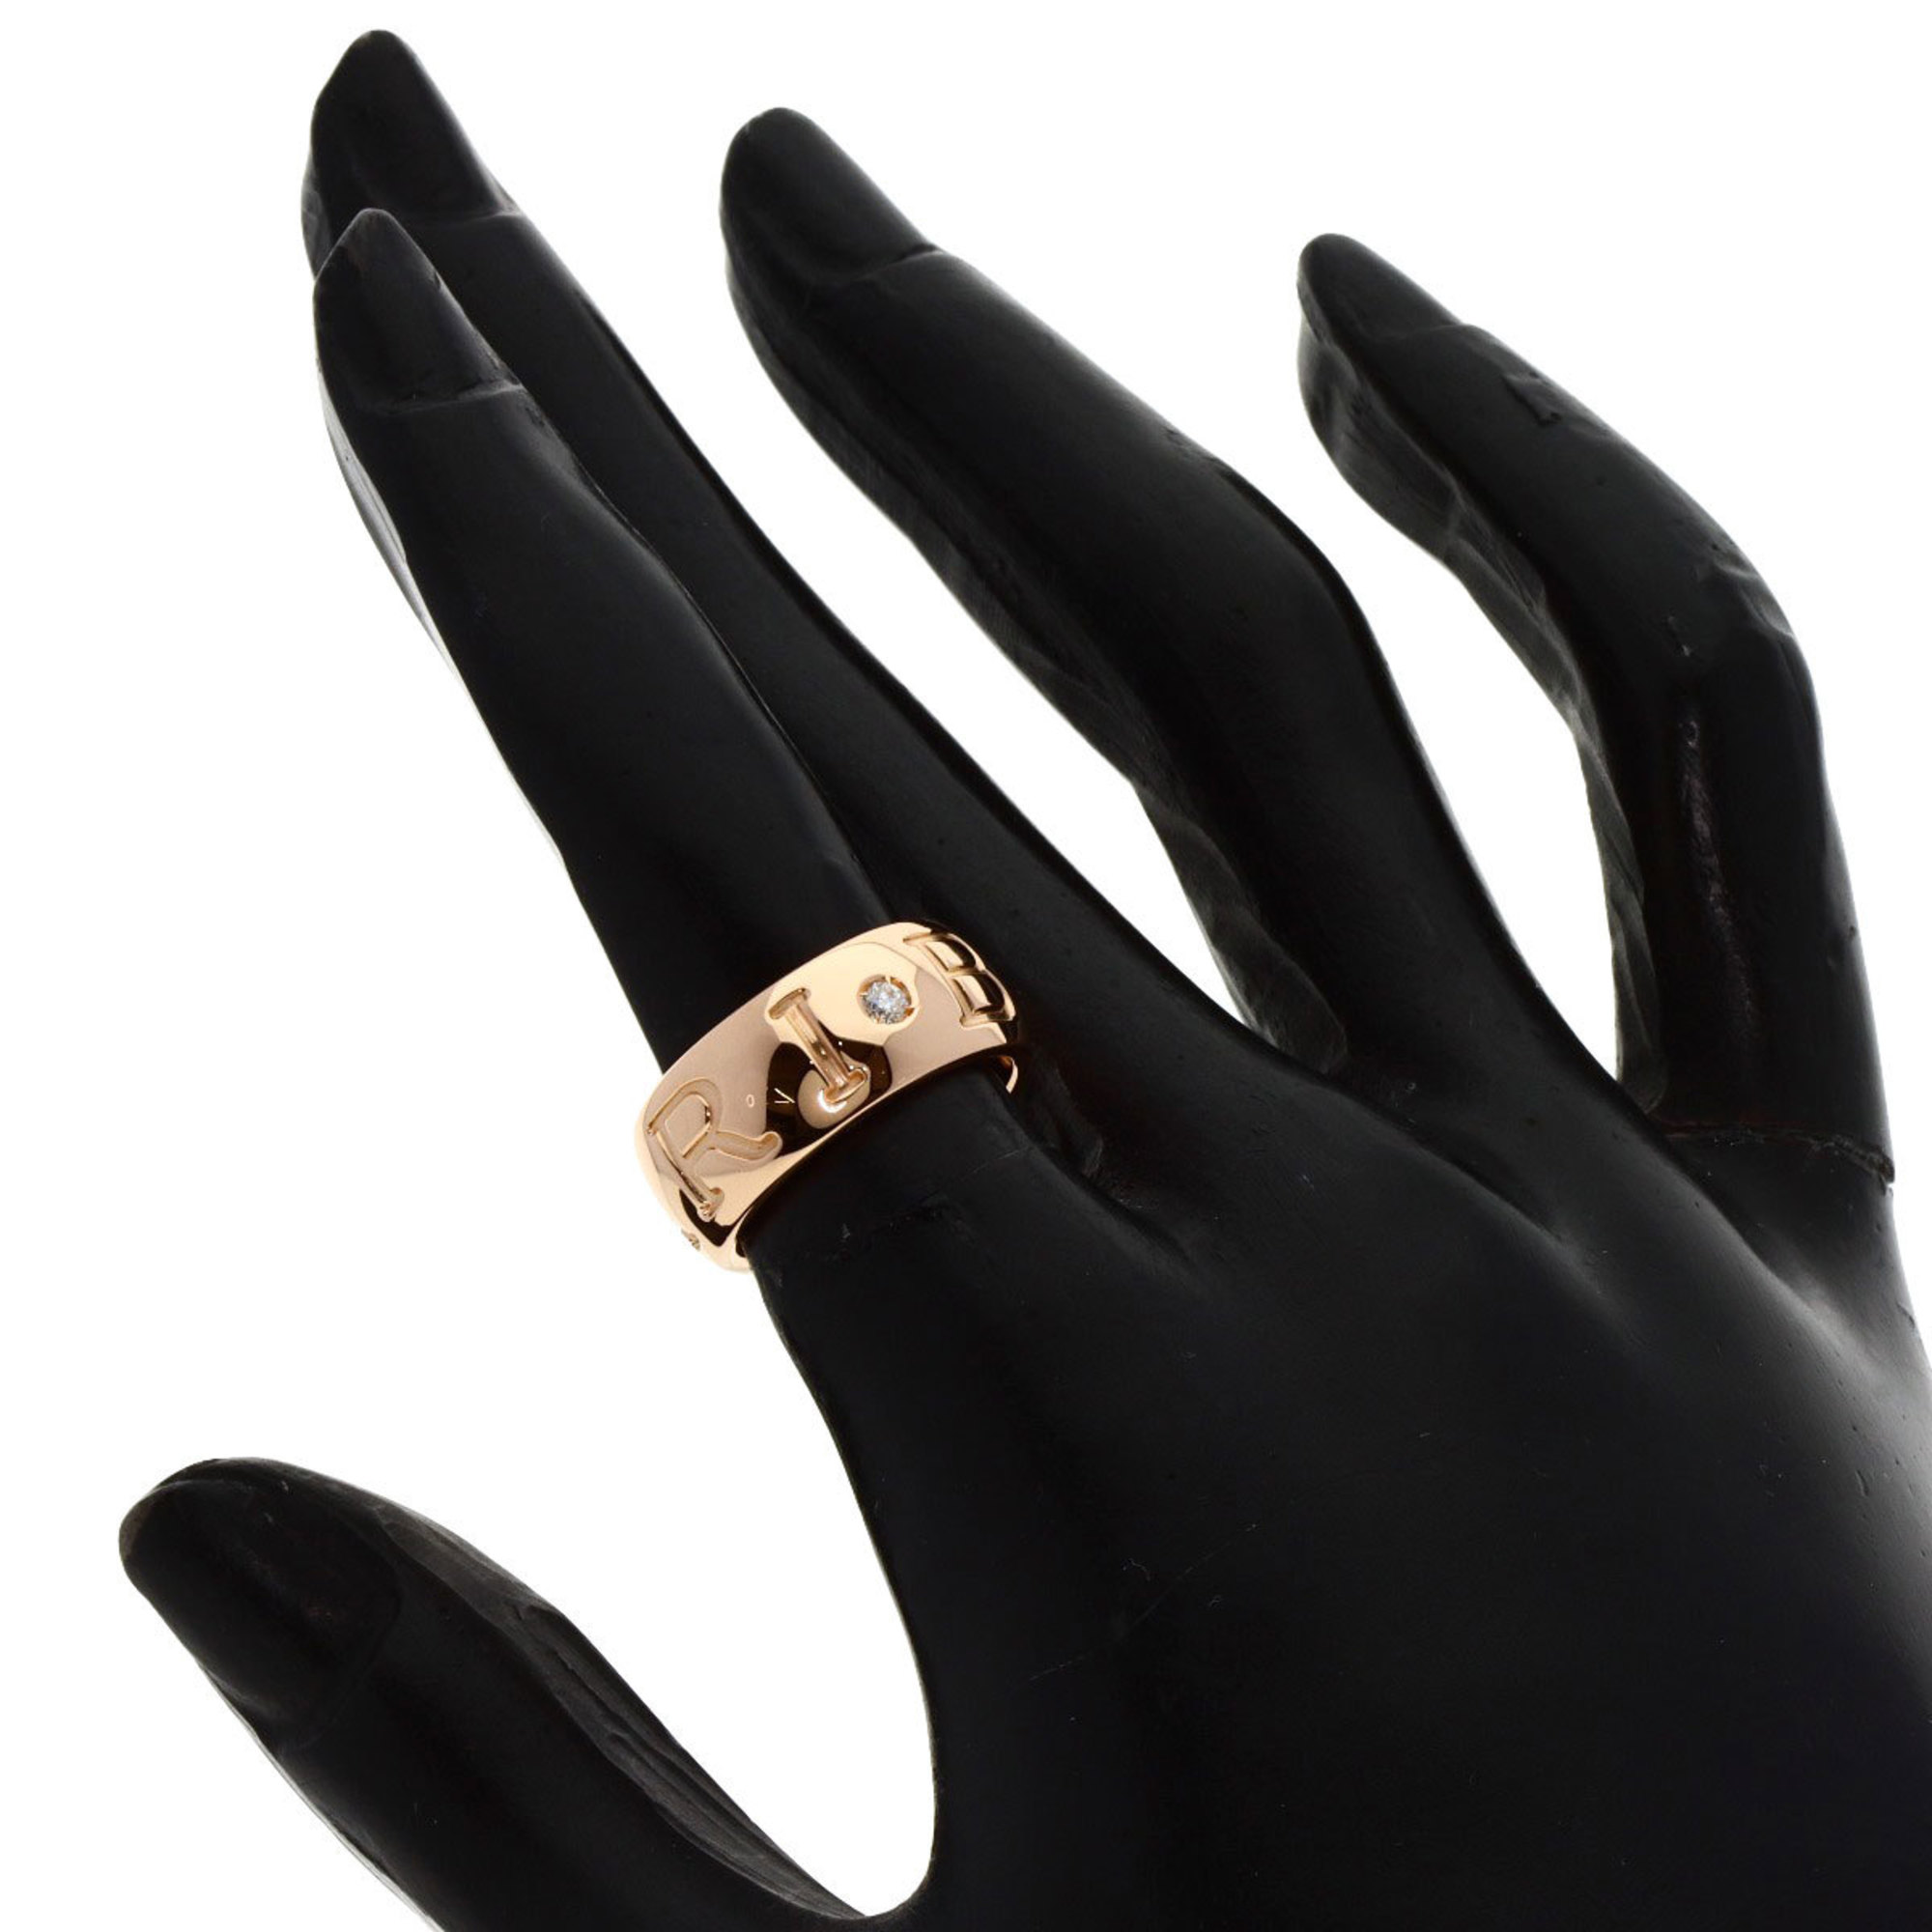 BVLGARI Mono Ring 1P Diamond #49 K18 Pink Gold Women's